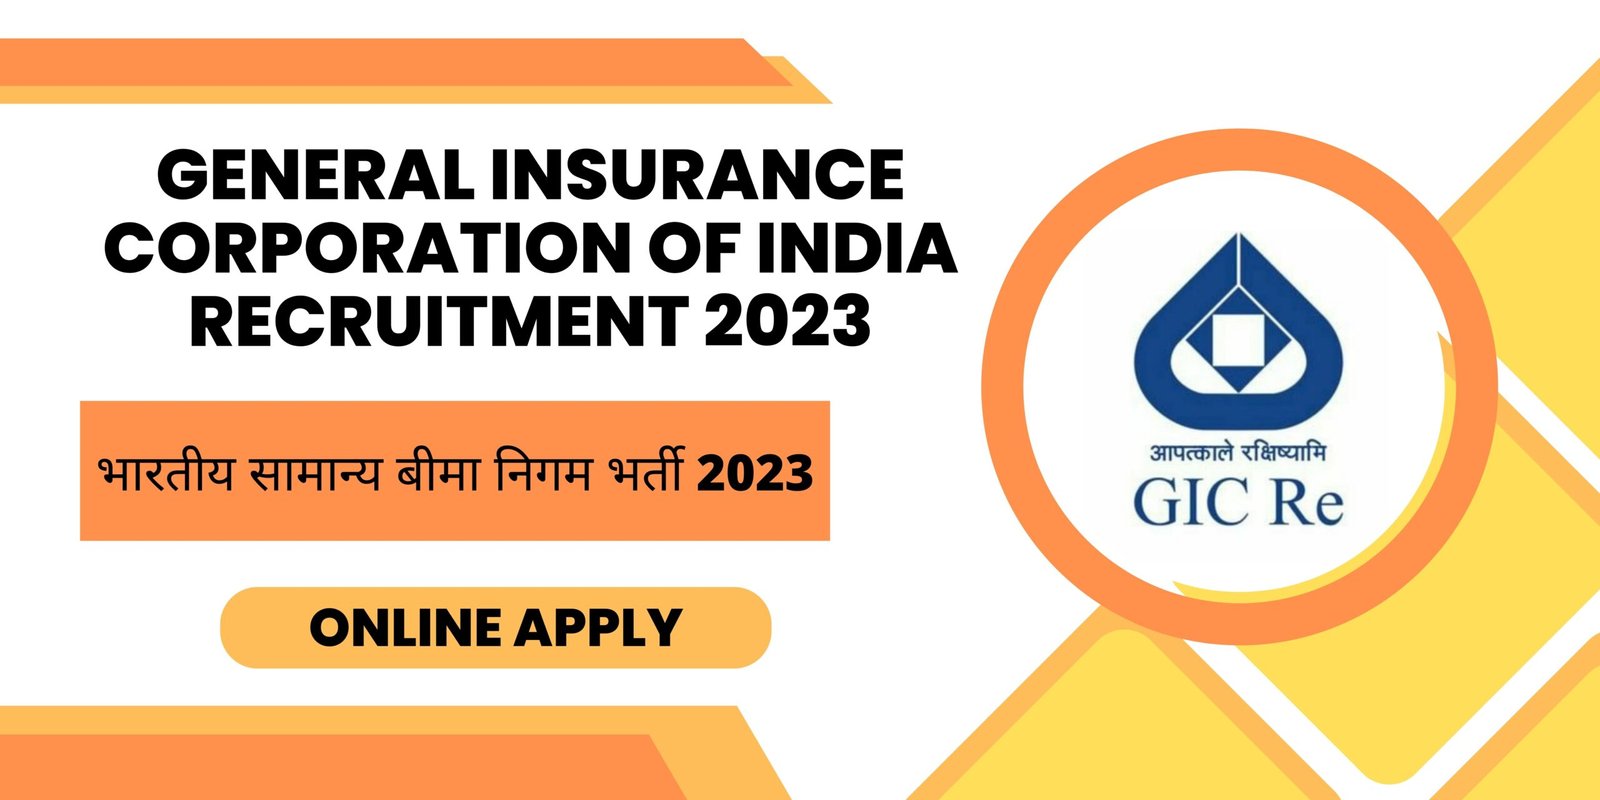 General Insurance Corporation of India Recruitment 2023